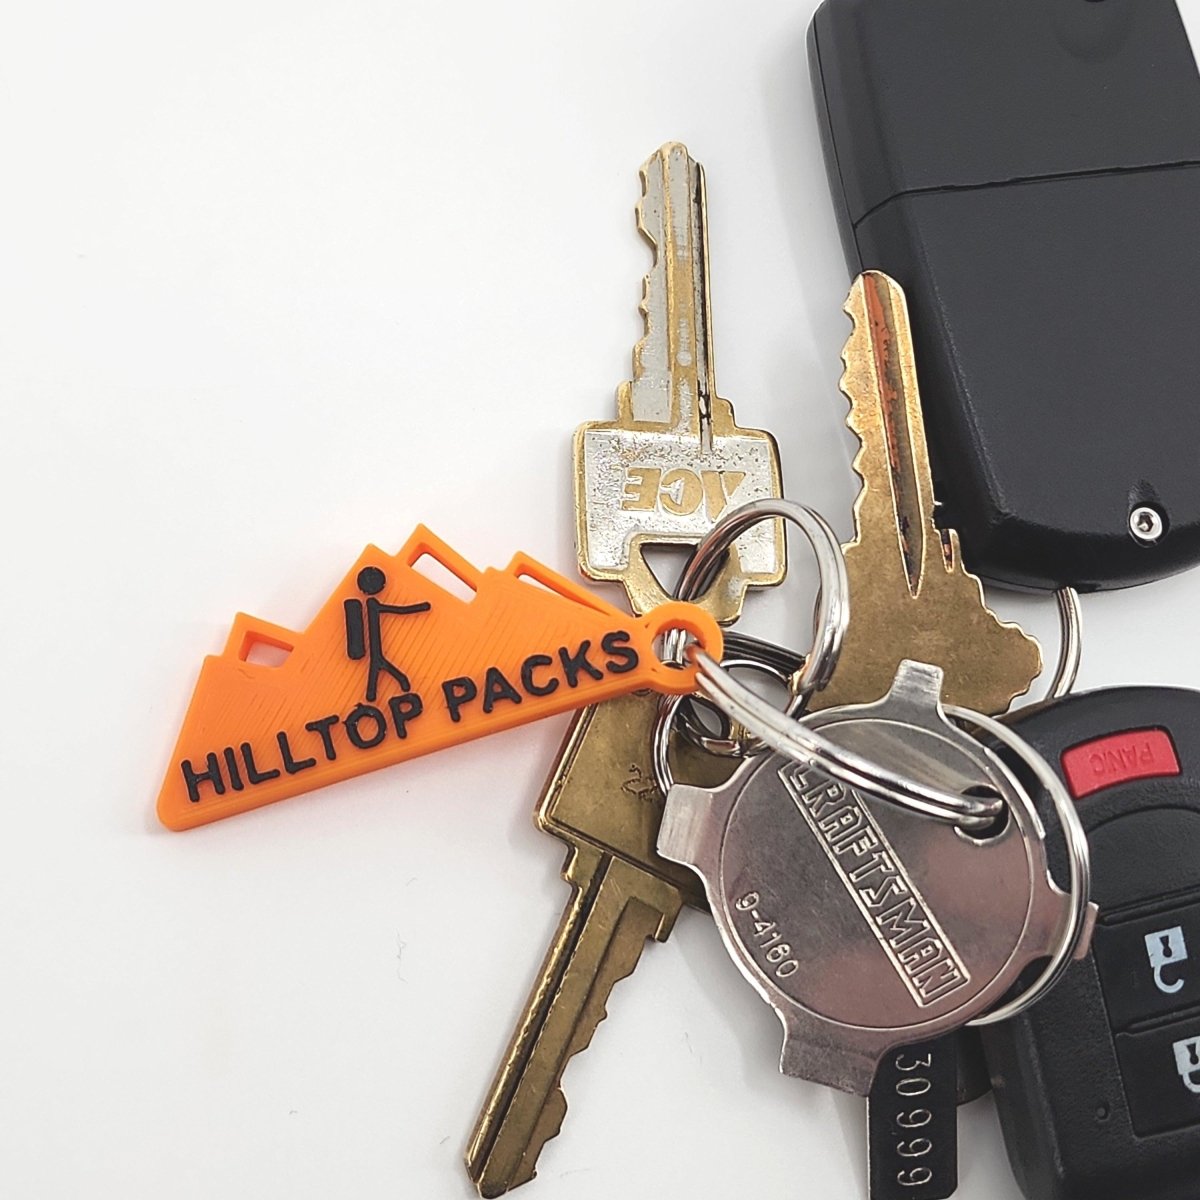 Keychain Hilltop Packs Edition - Hilltop Packs LLC